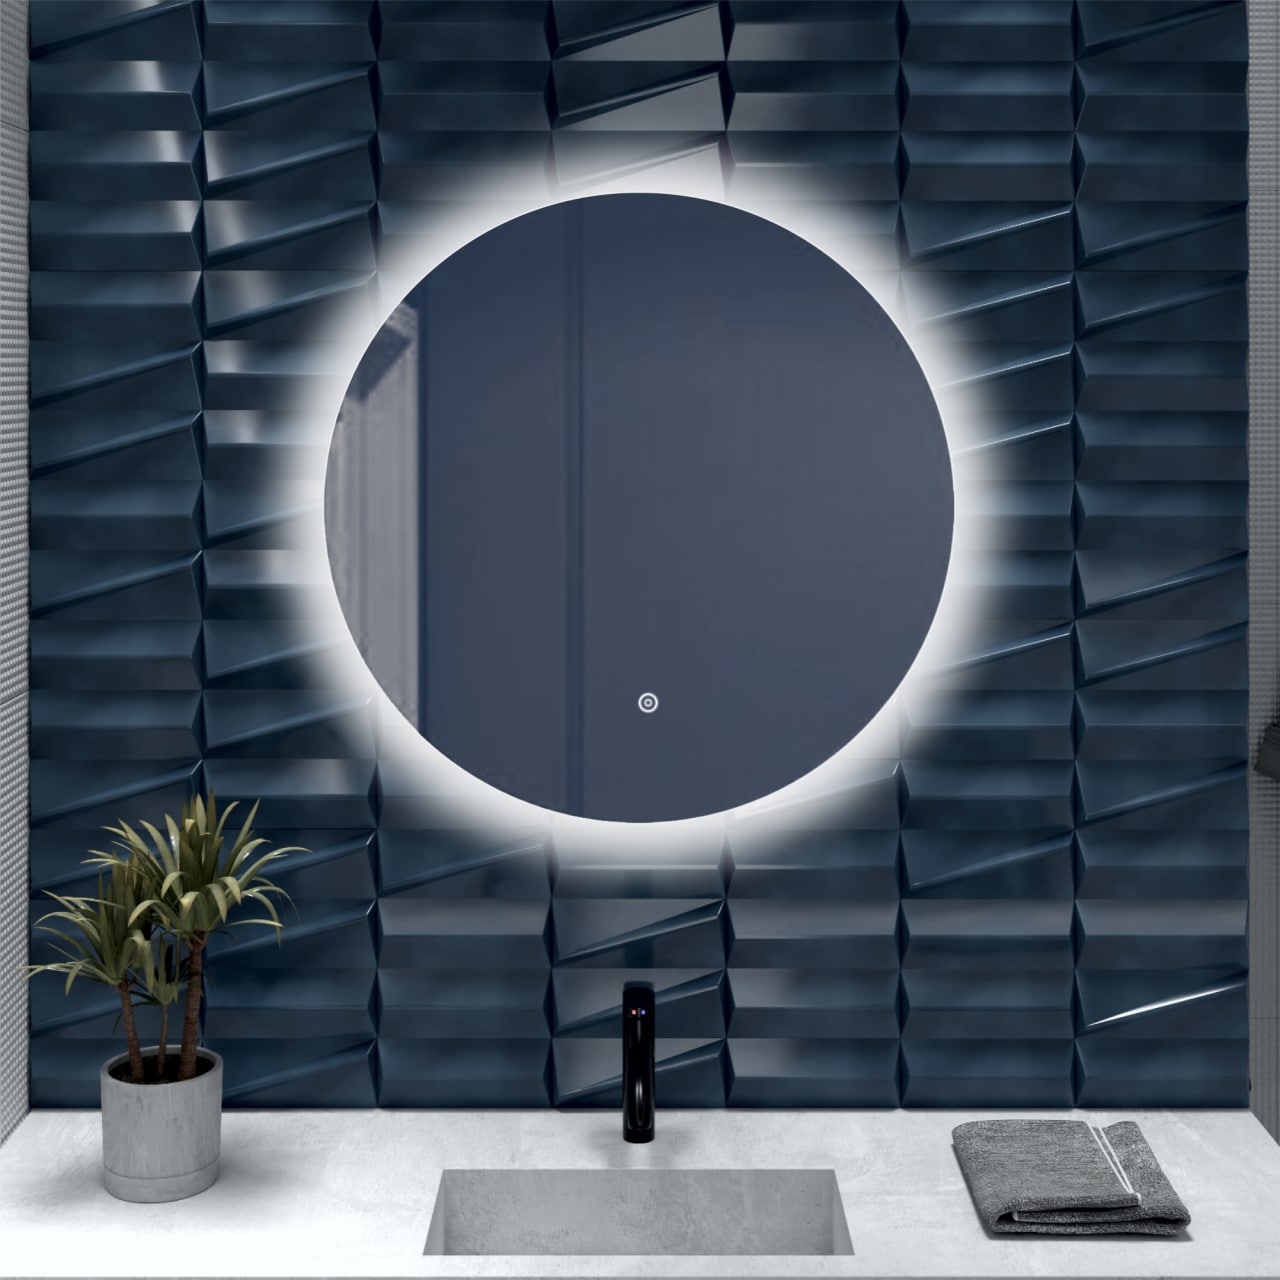 Зеркало для ванной Alfa Mirrors с холодной подсветкой 6500К круглое 80см, арт. Na-8Vh зеркало круглое mn d130 для ванной с холодной led подсветкой и часами